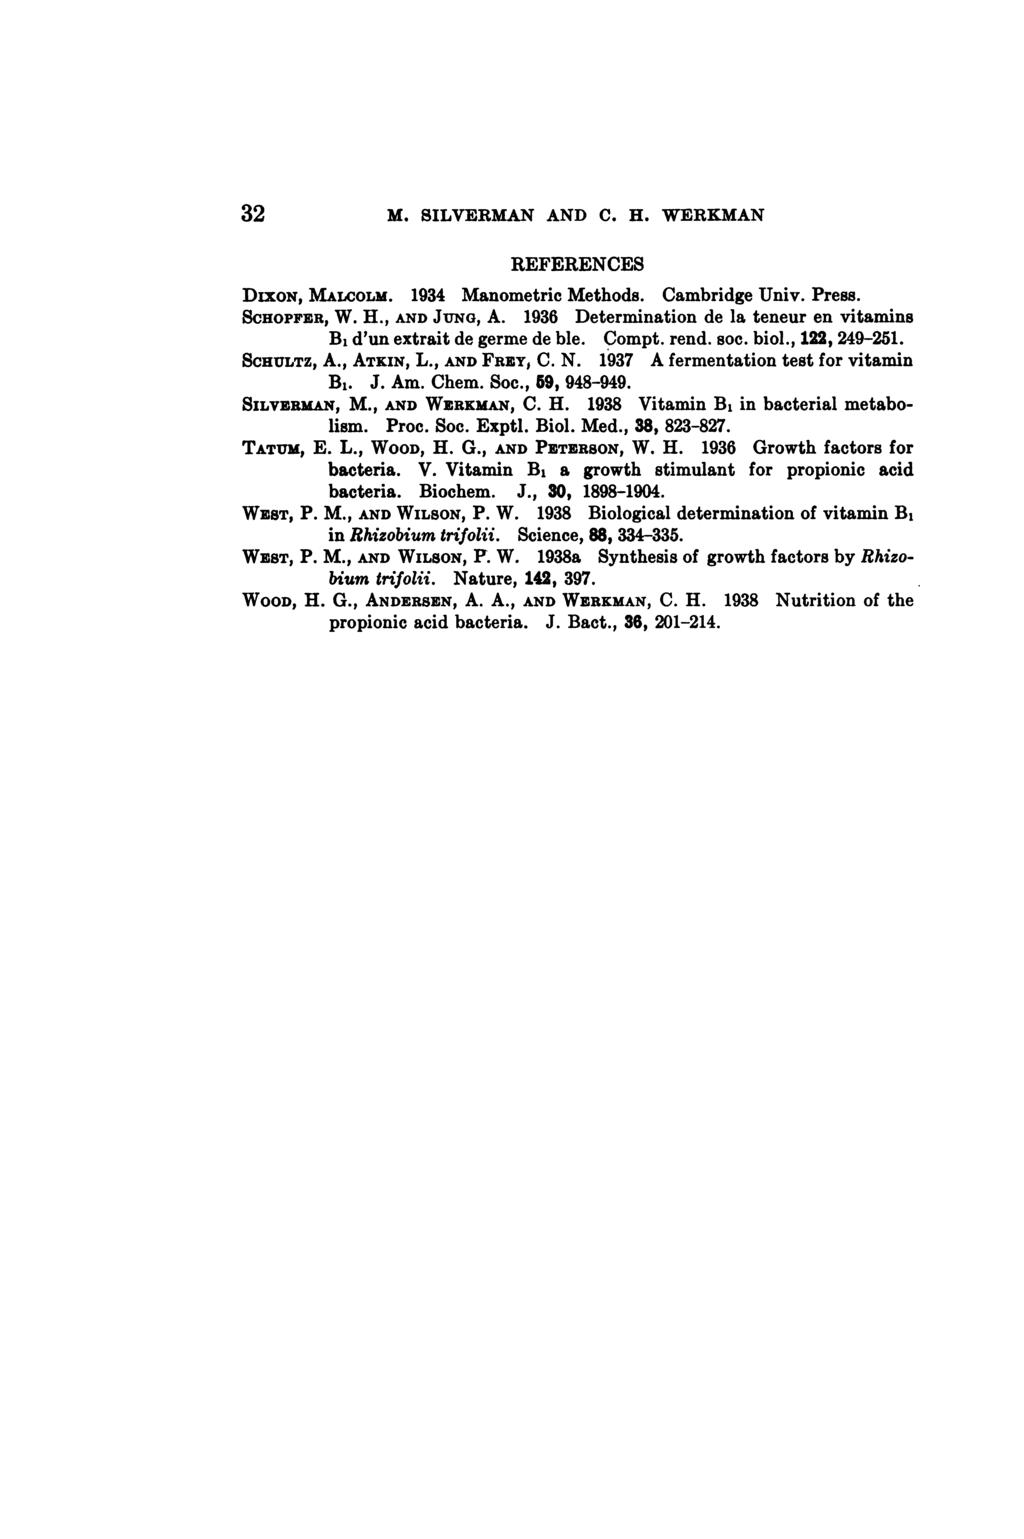 32 M. SILVERMAN AND C. H. WERKMAN REFERENCES DIXON, MALCOLM. 1934 Manometric Methods. Cambridge Univ. Press. SCHOPFER, W. H., AND JUNG, A.